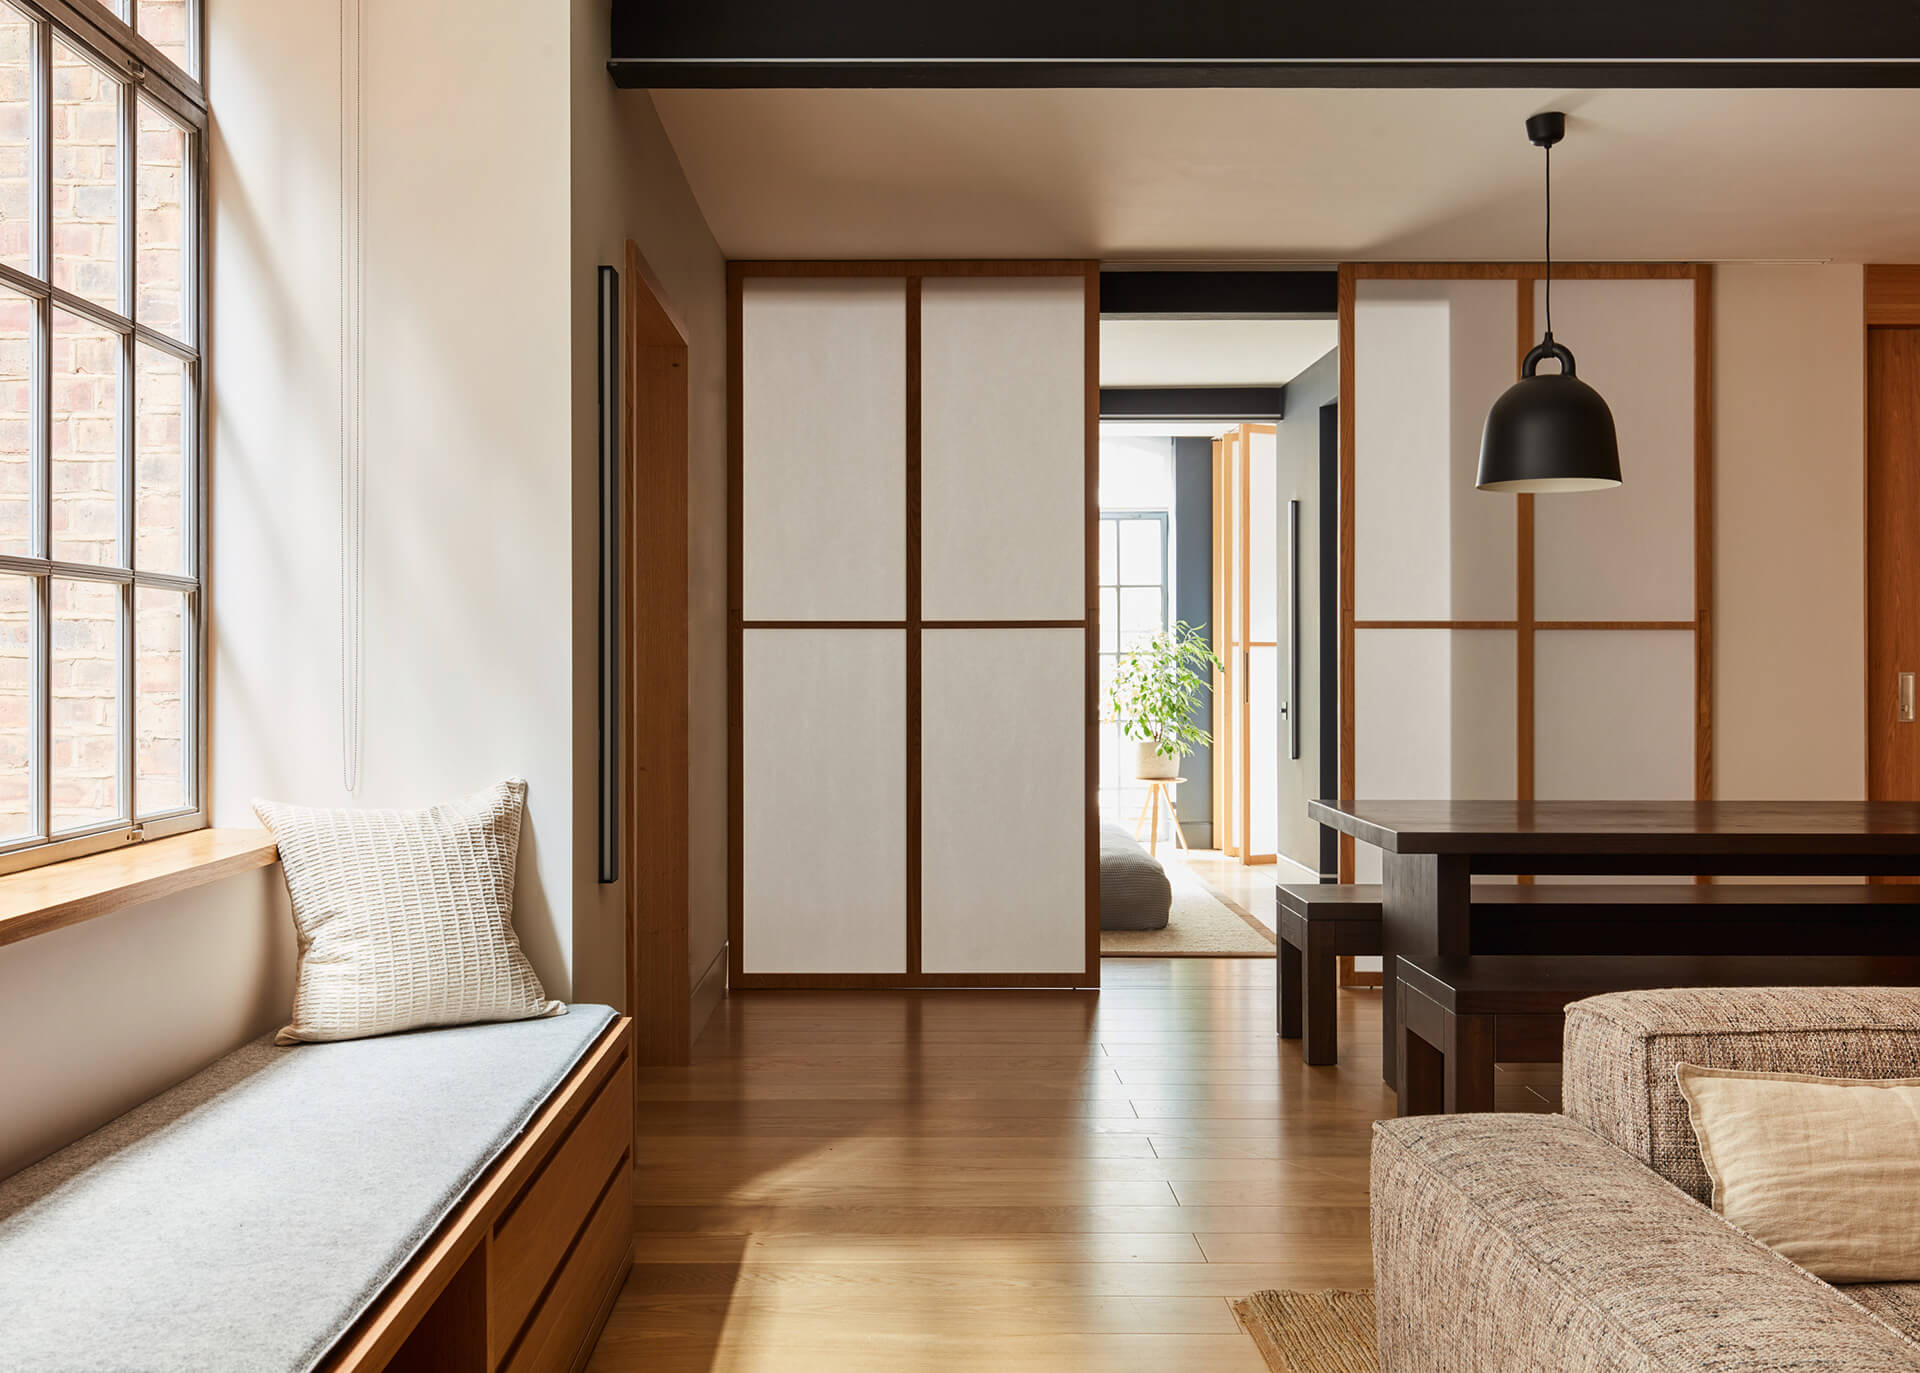 Soho Loft living room. Ashridge plank wood floor, window seating. rice paper doors.